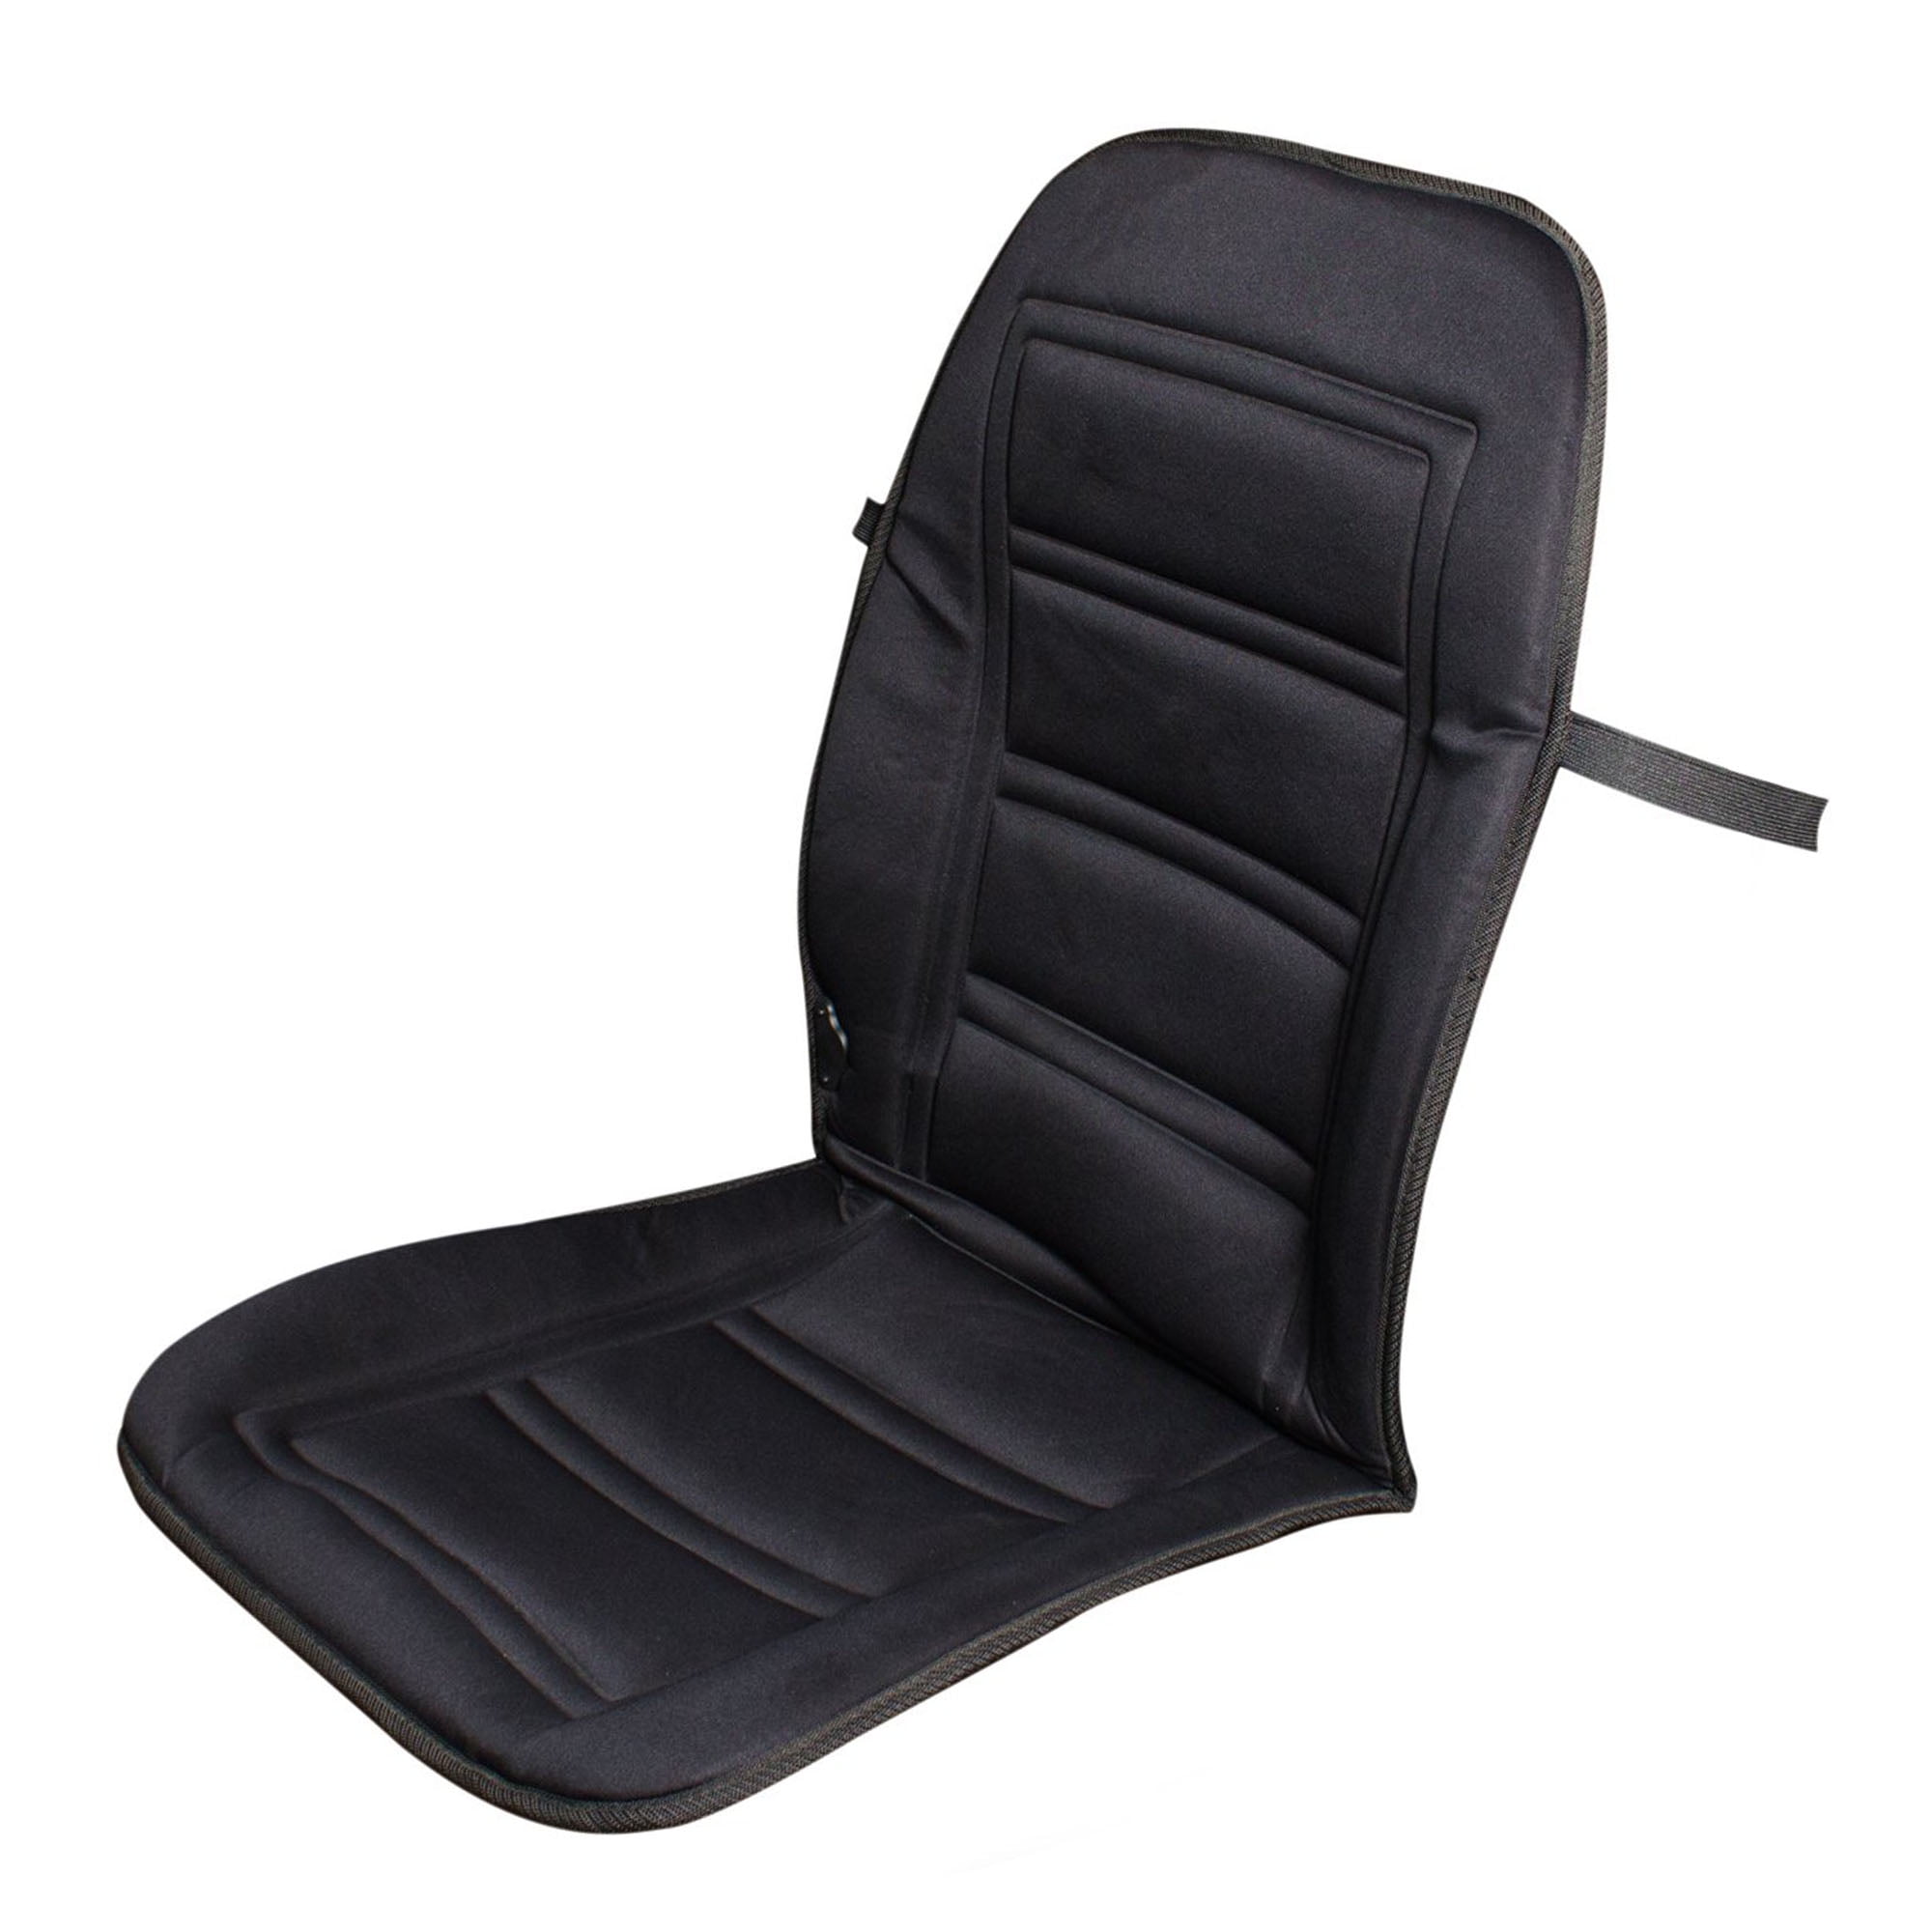 1pc 12V Car Heating Seat Cushion, 30s Fast Heating Car Seat Pad